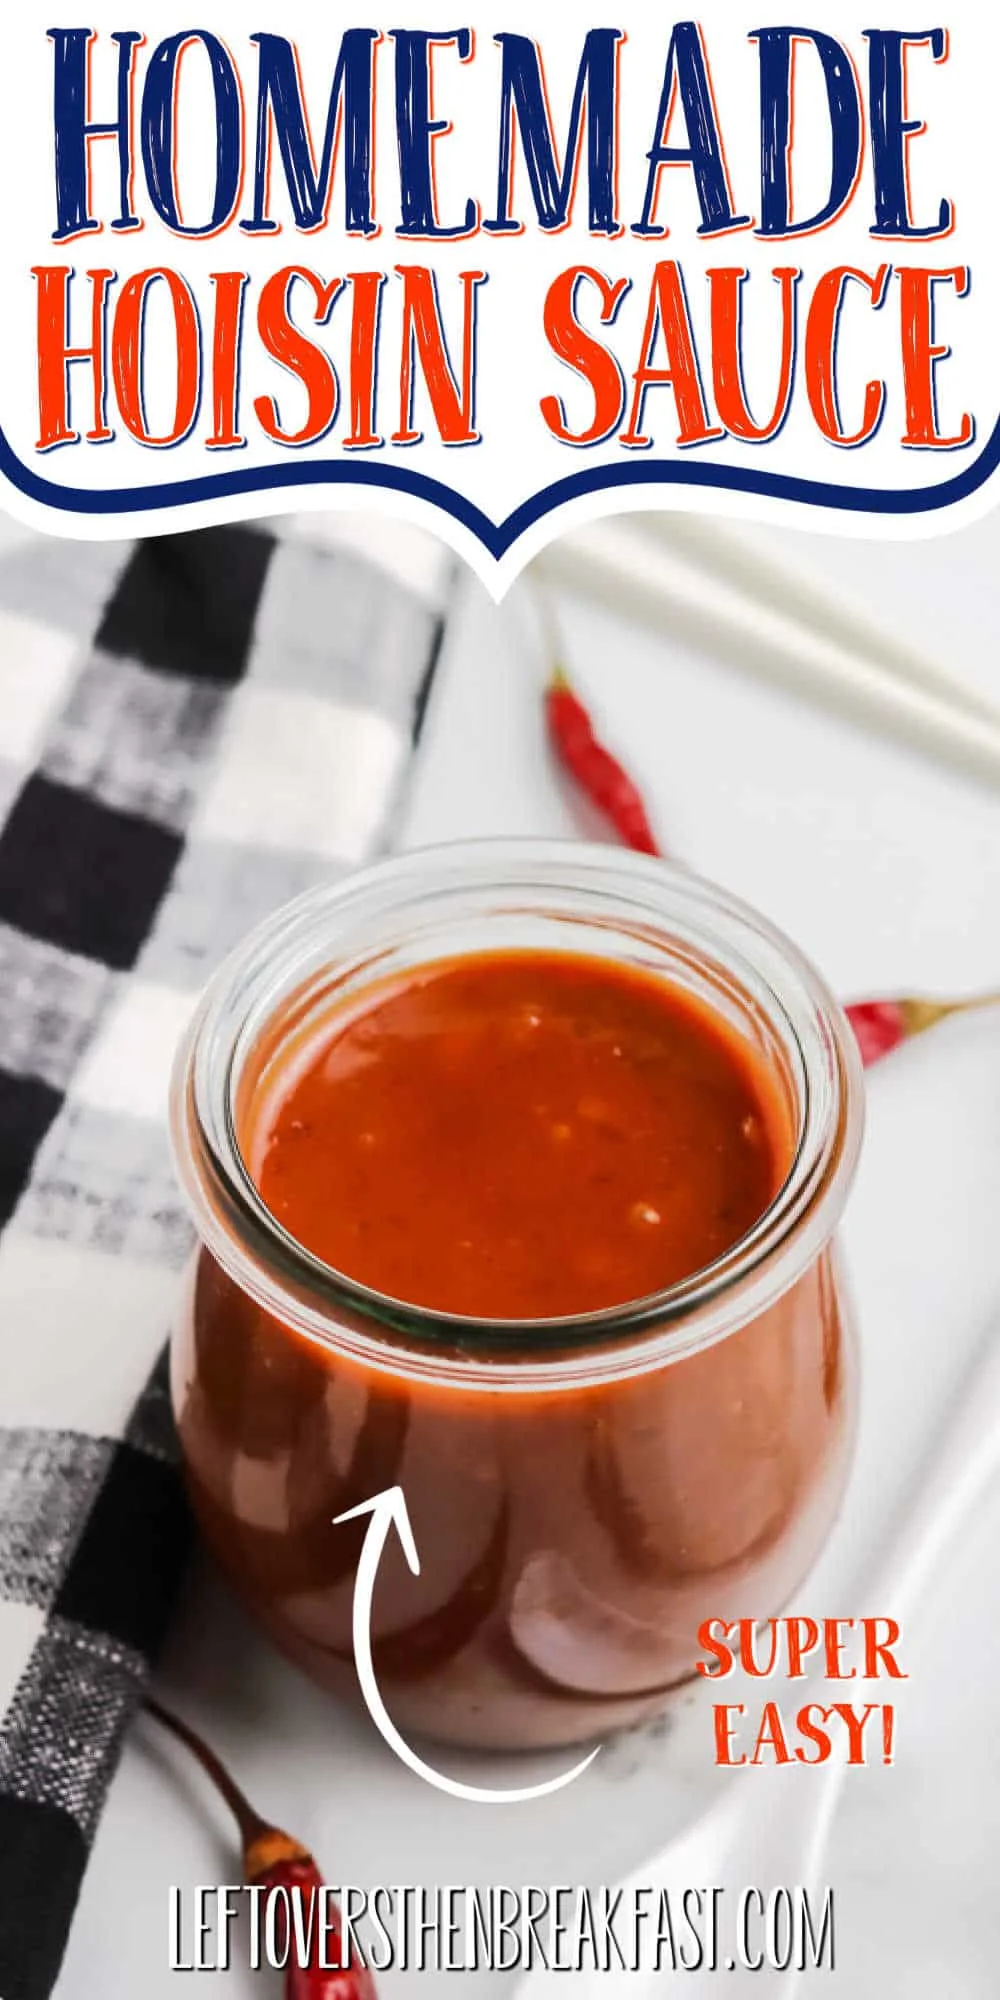 jar of sauce with text "homemade hoisin sauce"